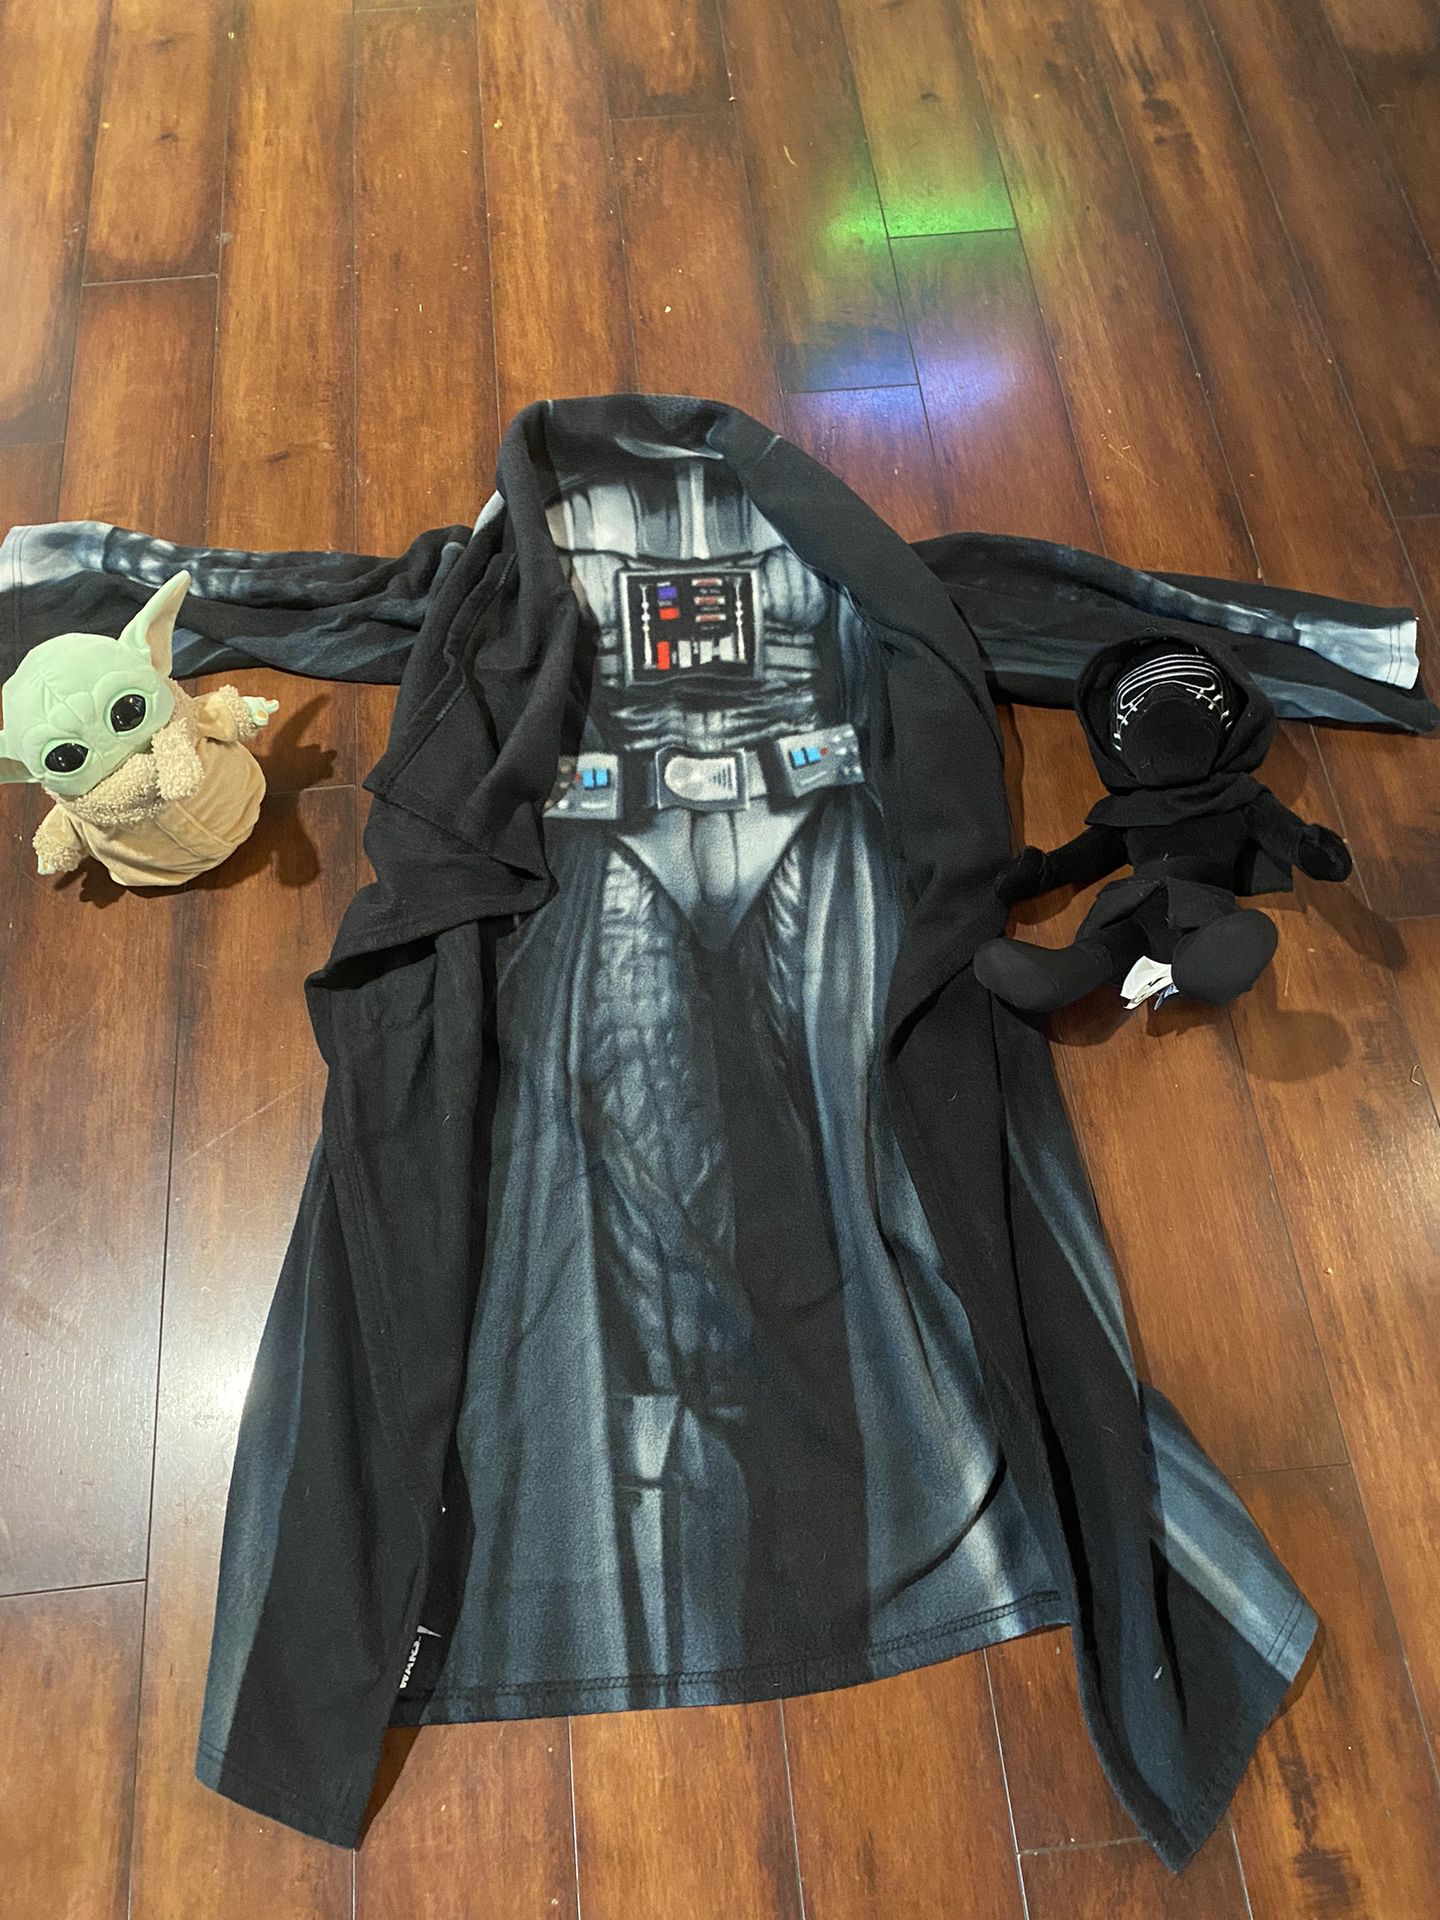 Star Wars Throw Blanket And Yoda And Dark Vader Stuffed Animals